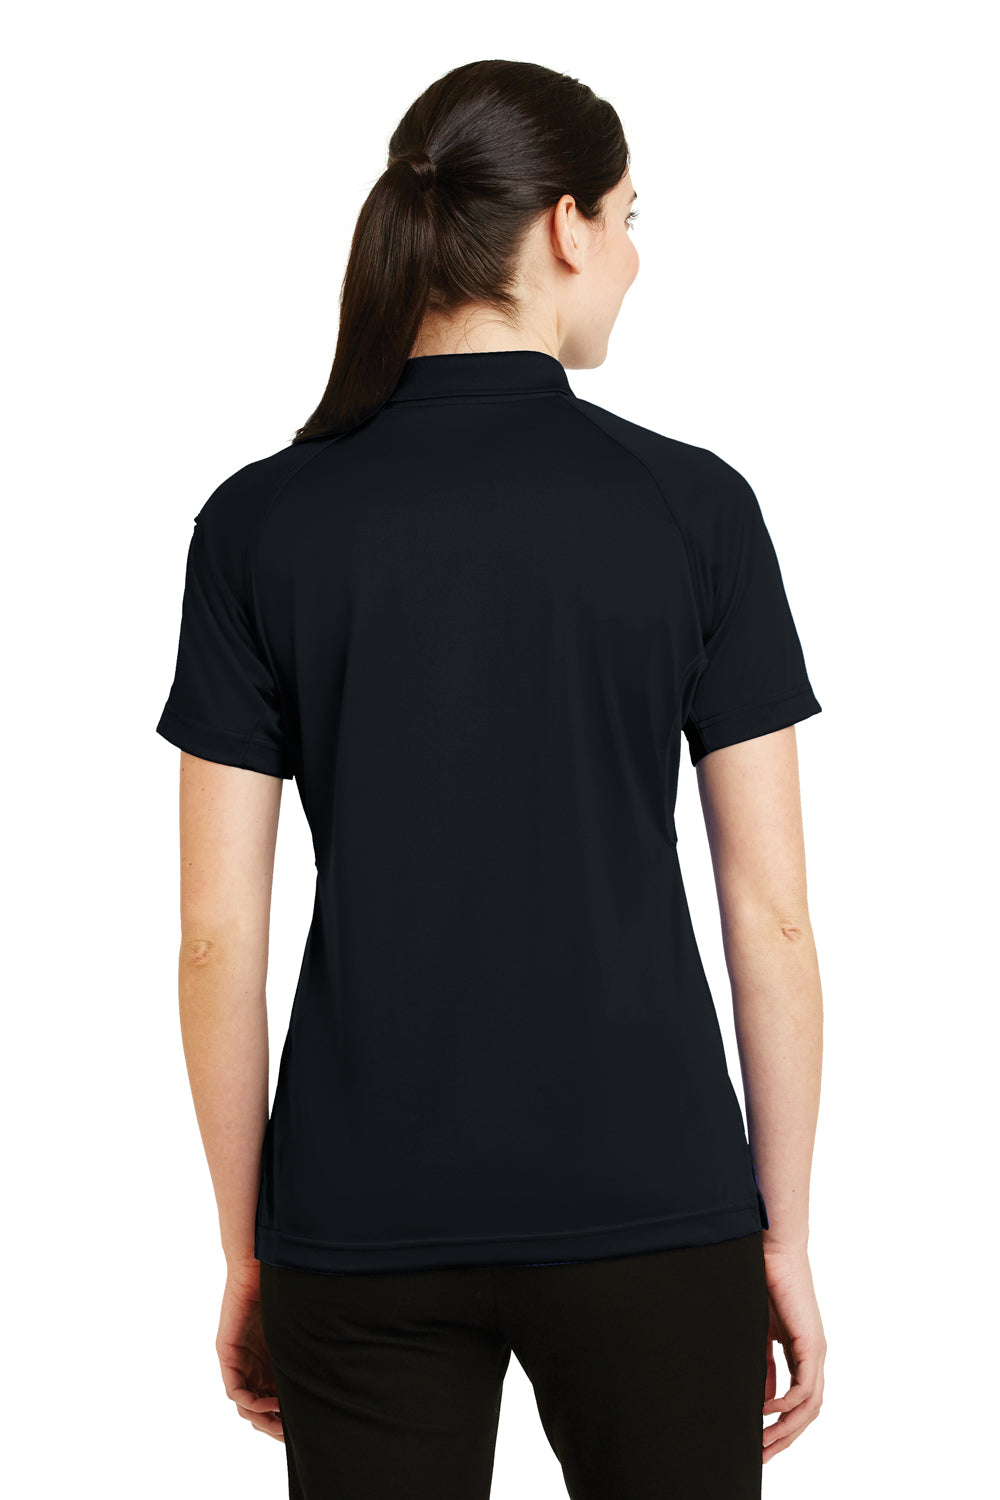 CornerStone CS411 Womens Select Tactical Moisture Wicking Short Sleeve Polo Shirt Navy Blue Back